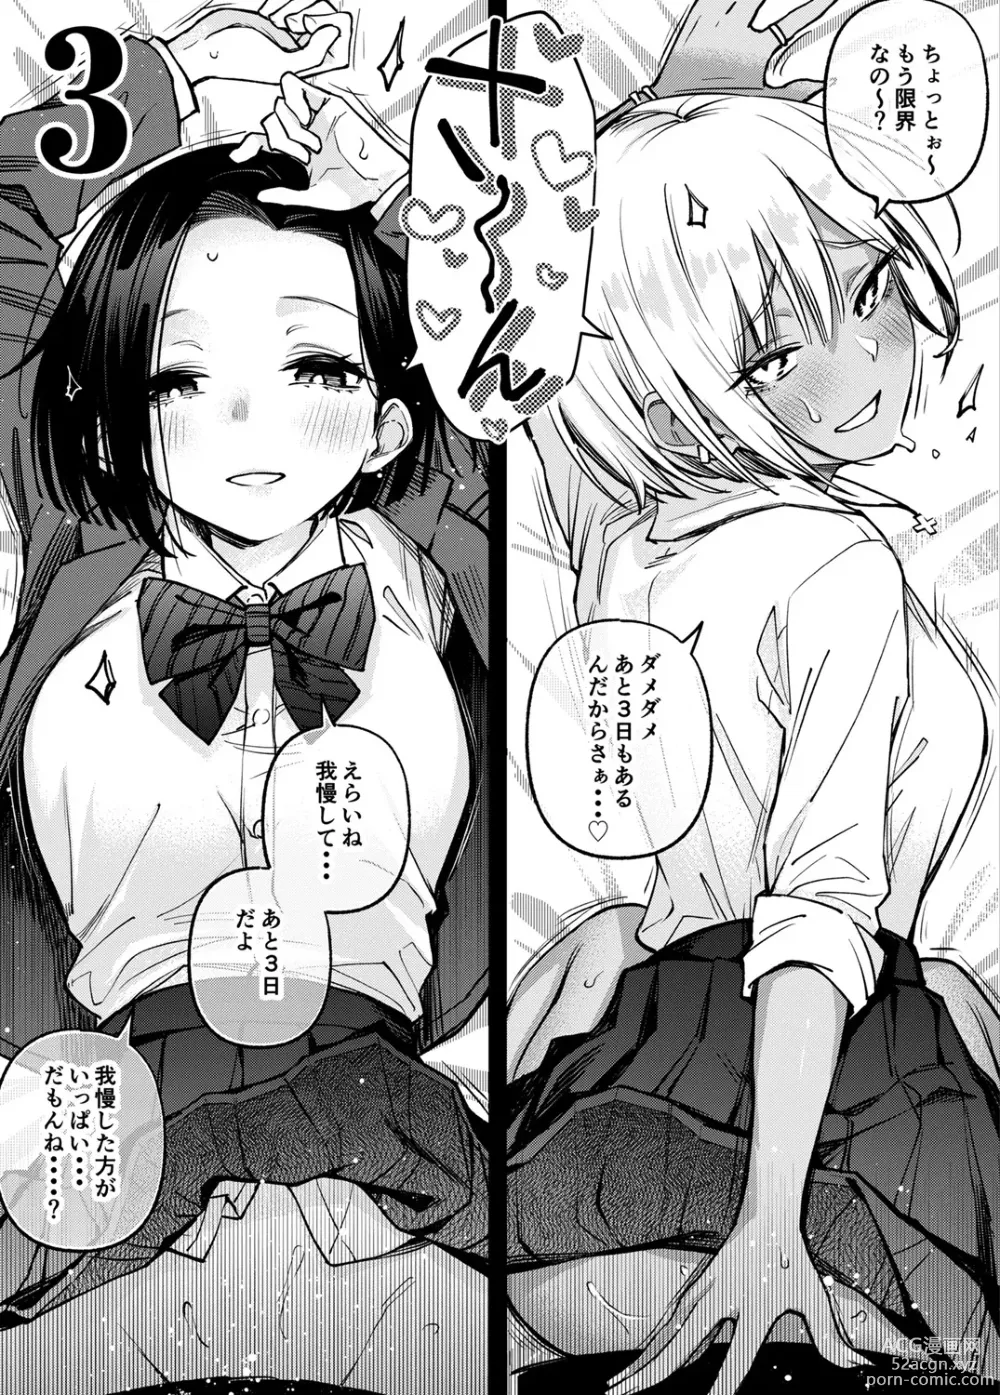 Page 192 of manga Shojo ga Sakkacha  Dame desu ka? - Is it bad that the virgin feel horny?